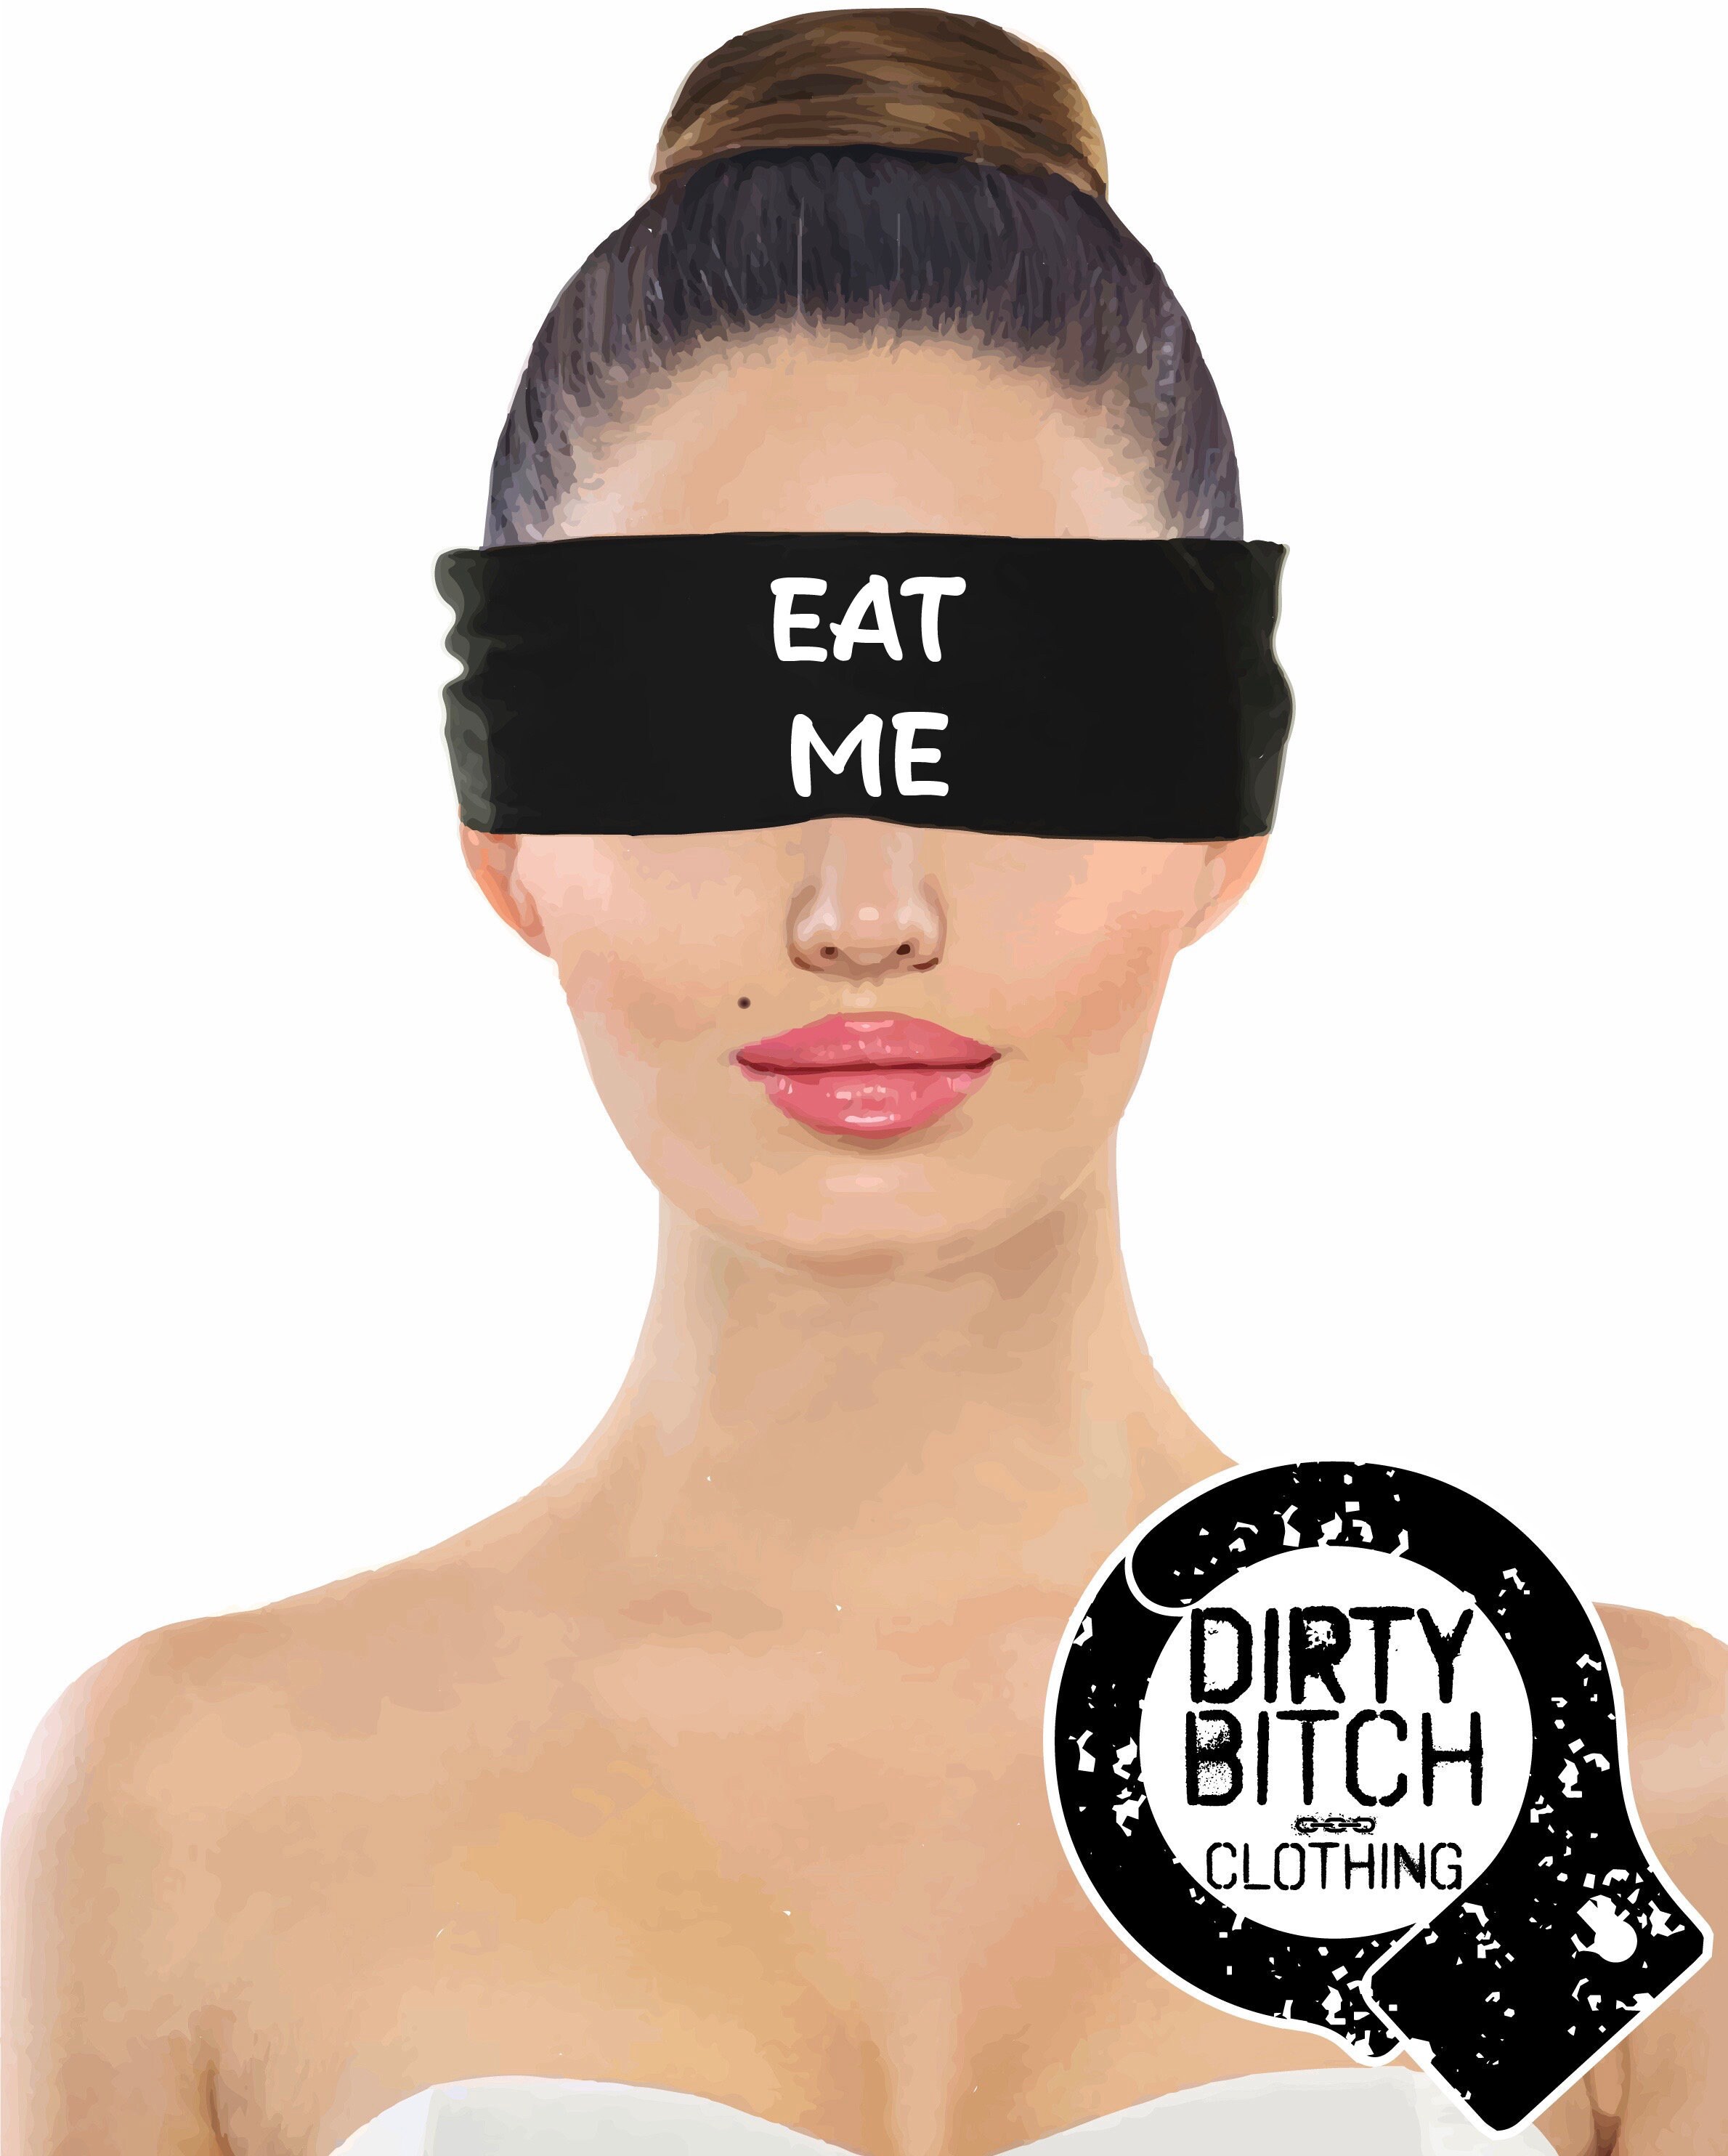 Eat Me Blindfold Fetish BDSM Hotwife Cuckold image picture